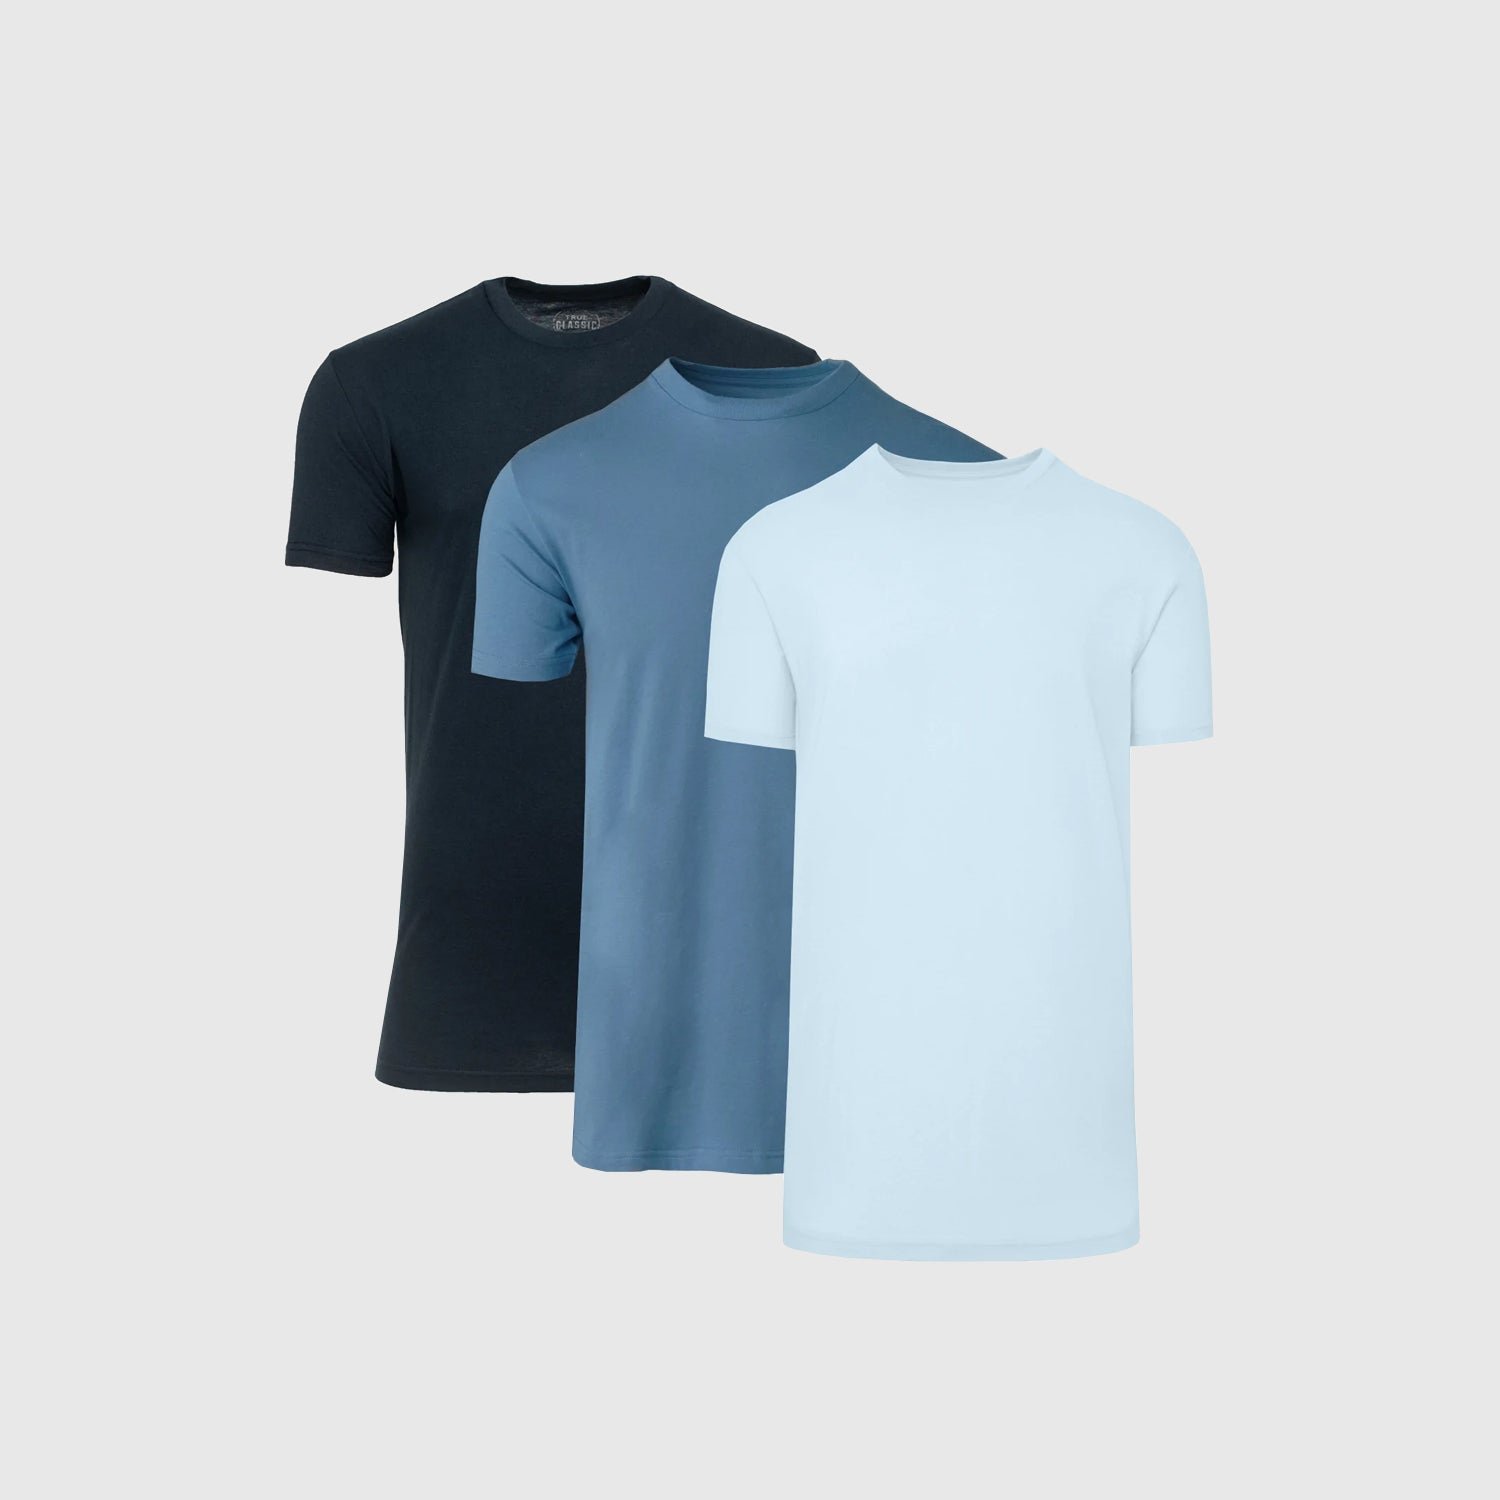 The All Blue Tall Round Hem Crew Neck T-Shirt 3-Pack